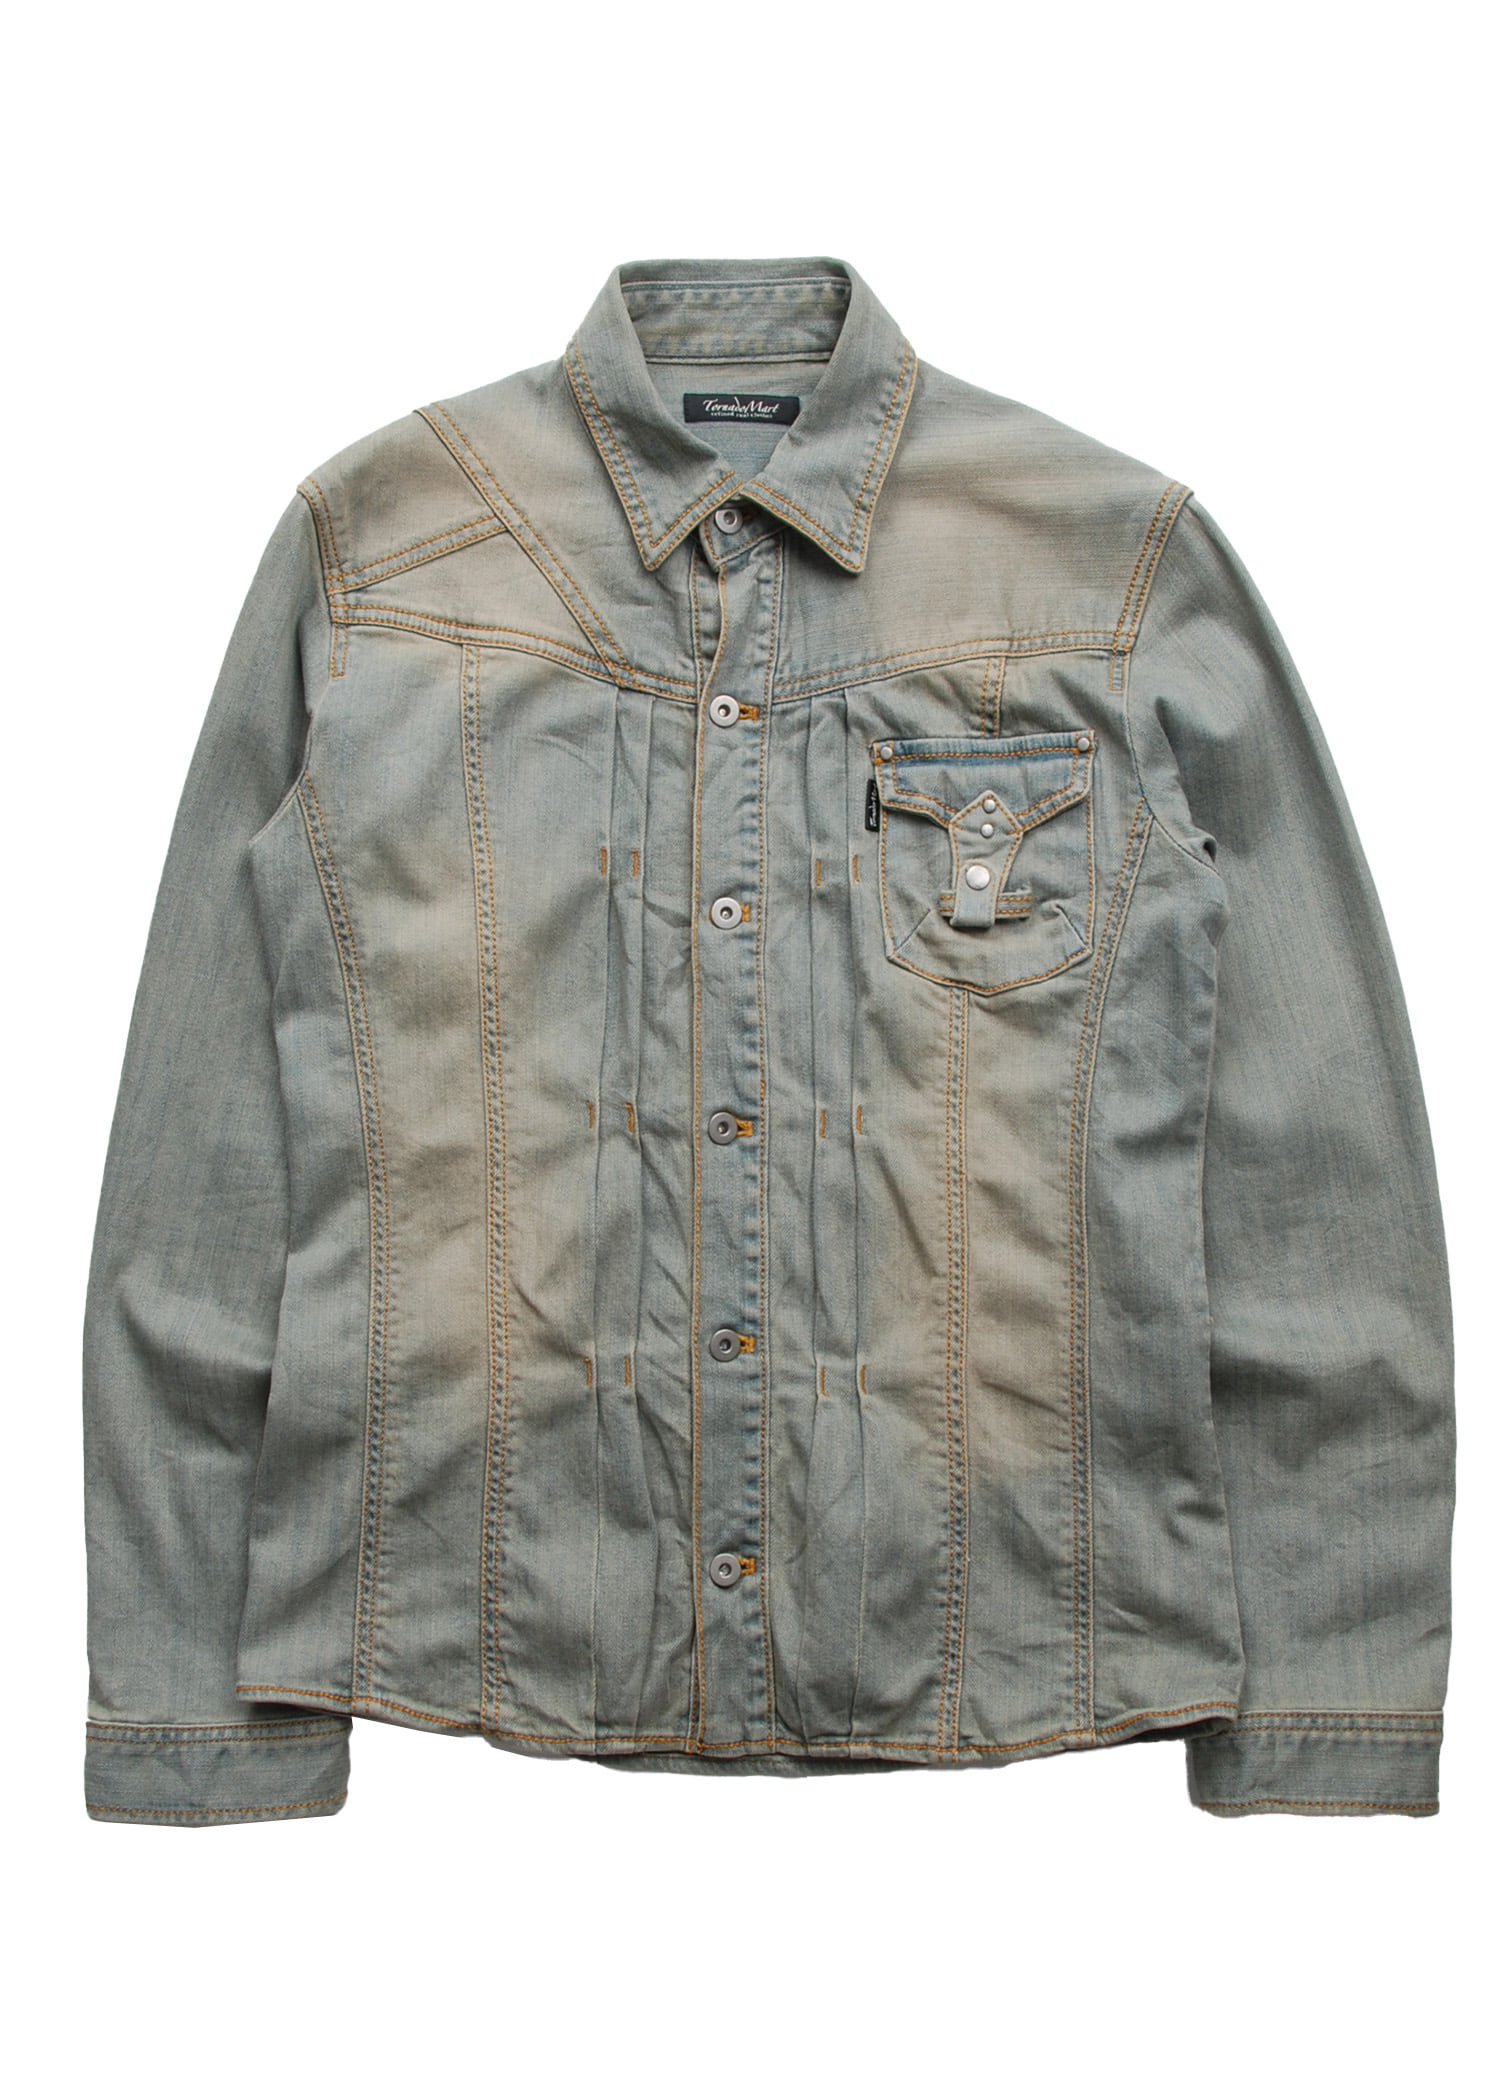 TORNADO MART shirts jacket